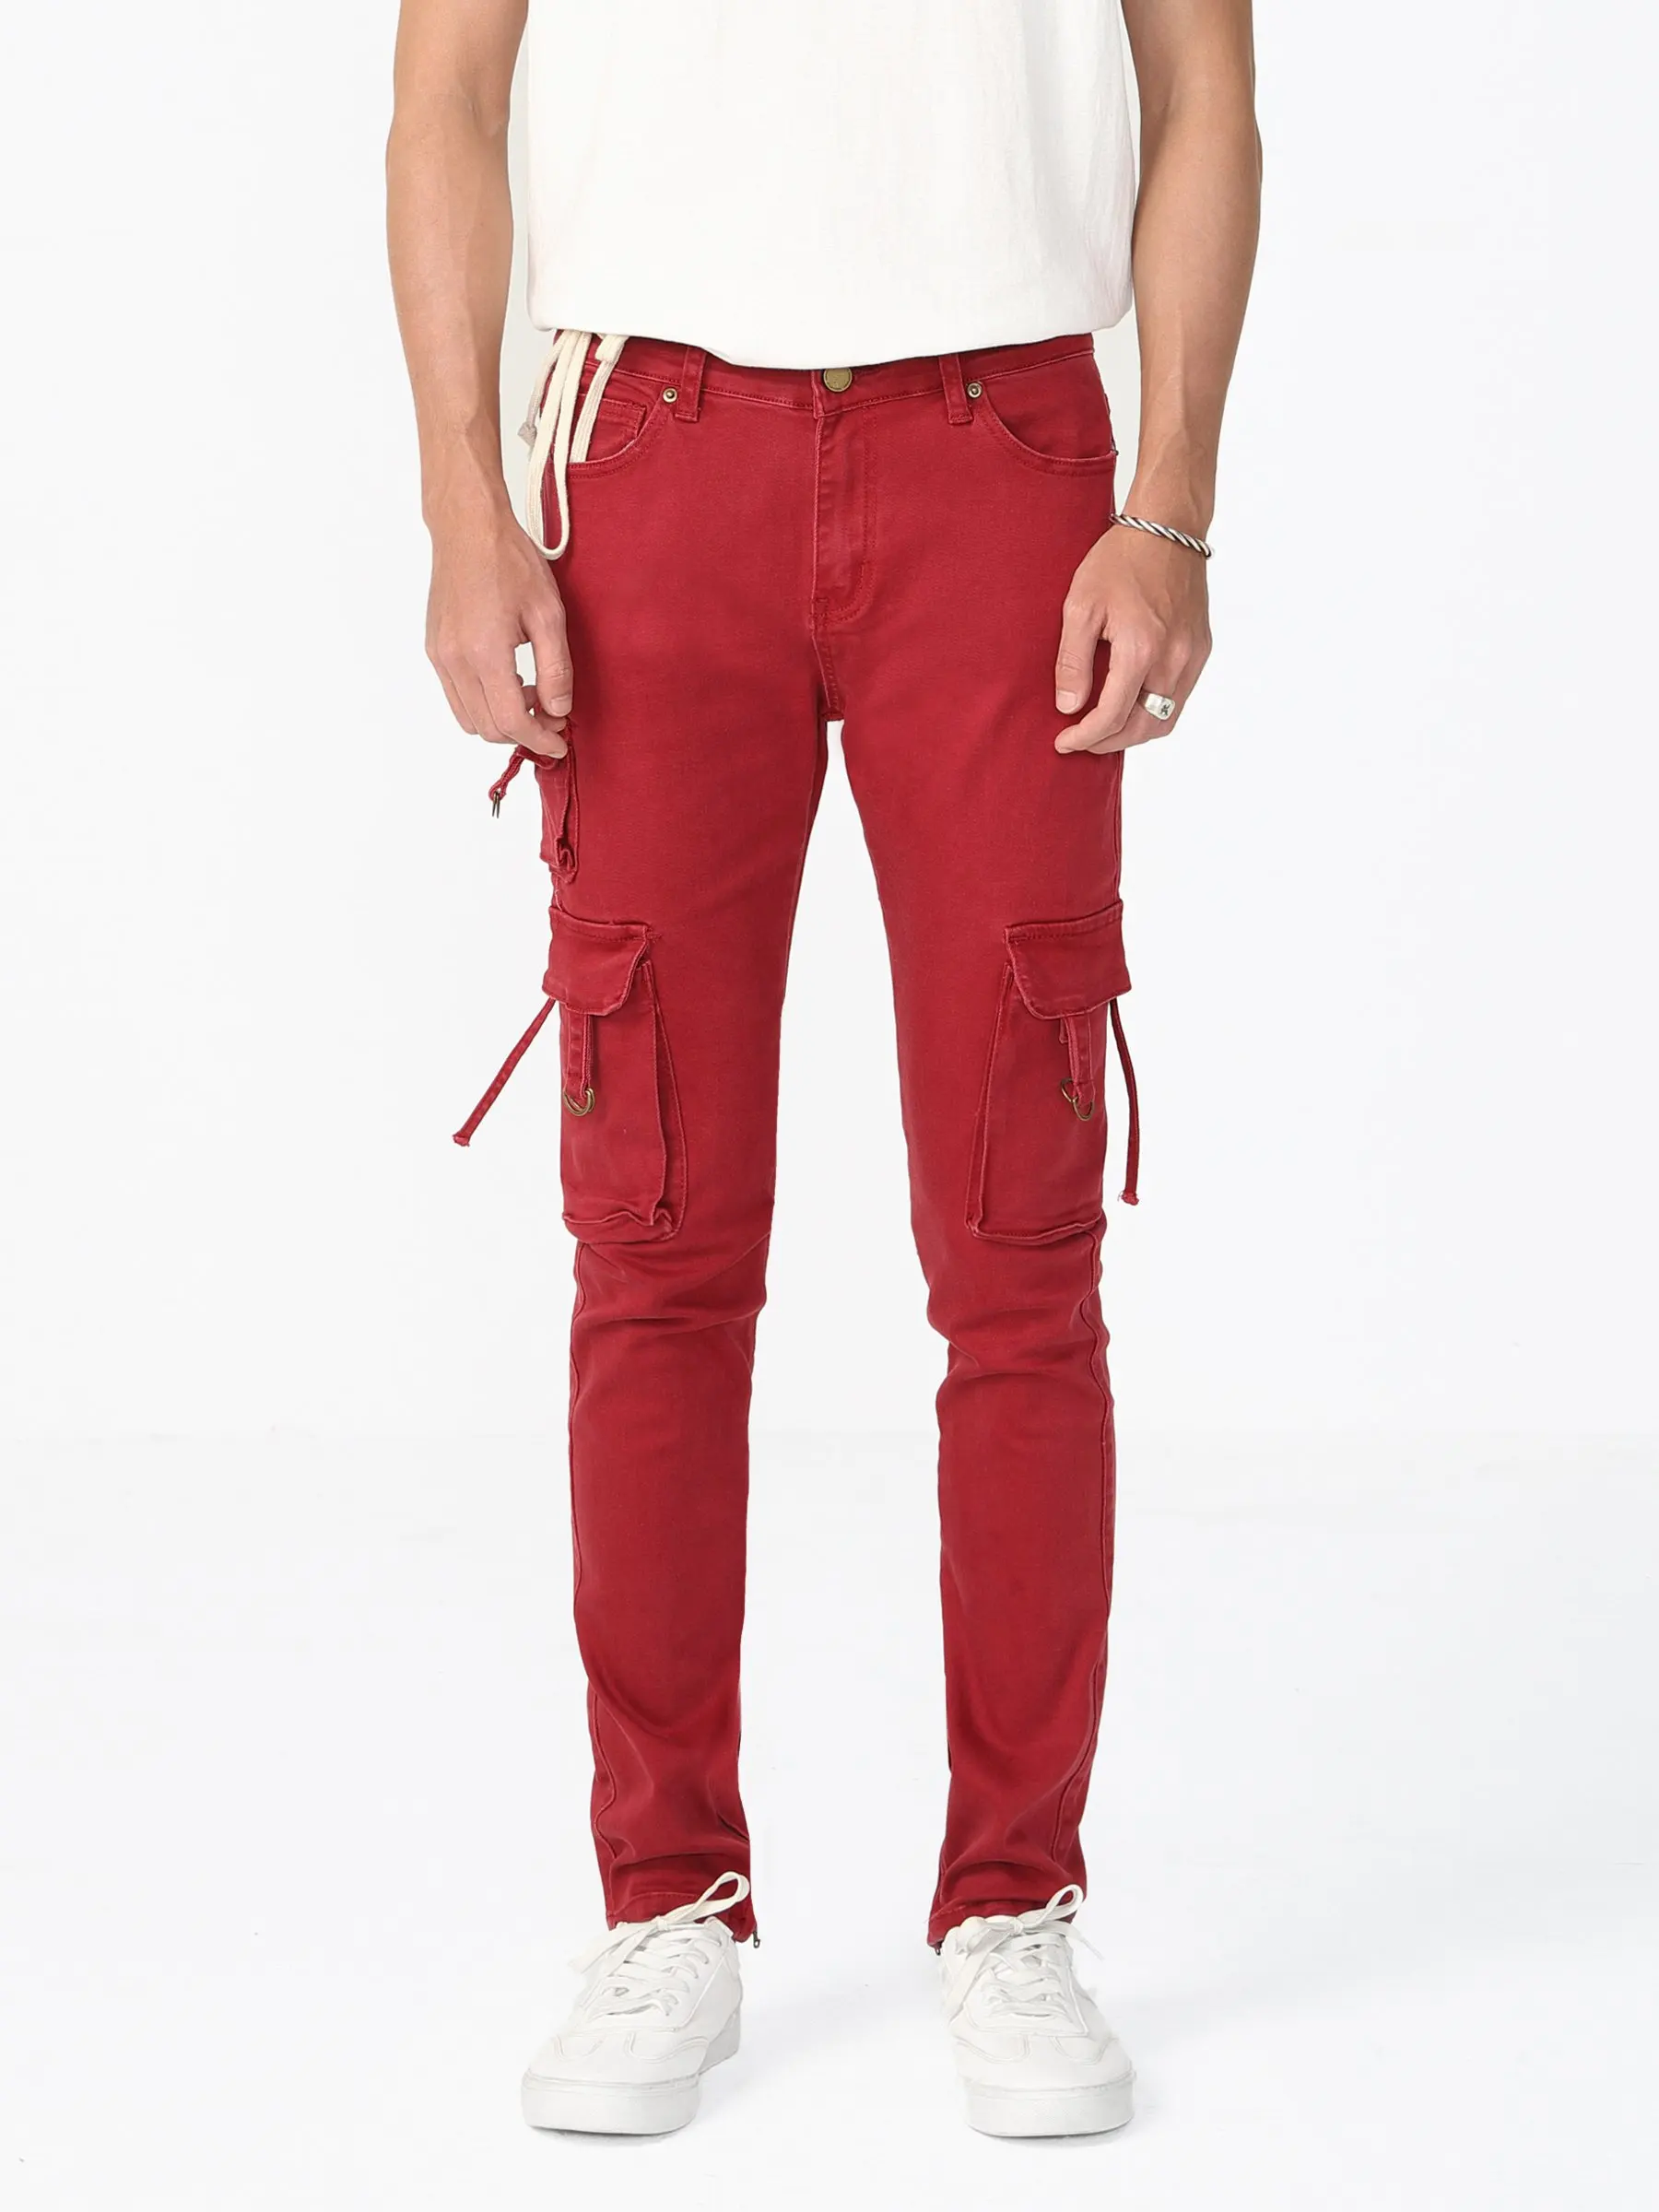 New Fashion Style Hip Hop Loose Pants Wine Red Jeans Baggy Cargo Pants For  Women Men  Pants  Capris  AliExpress